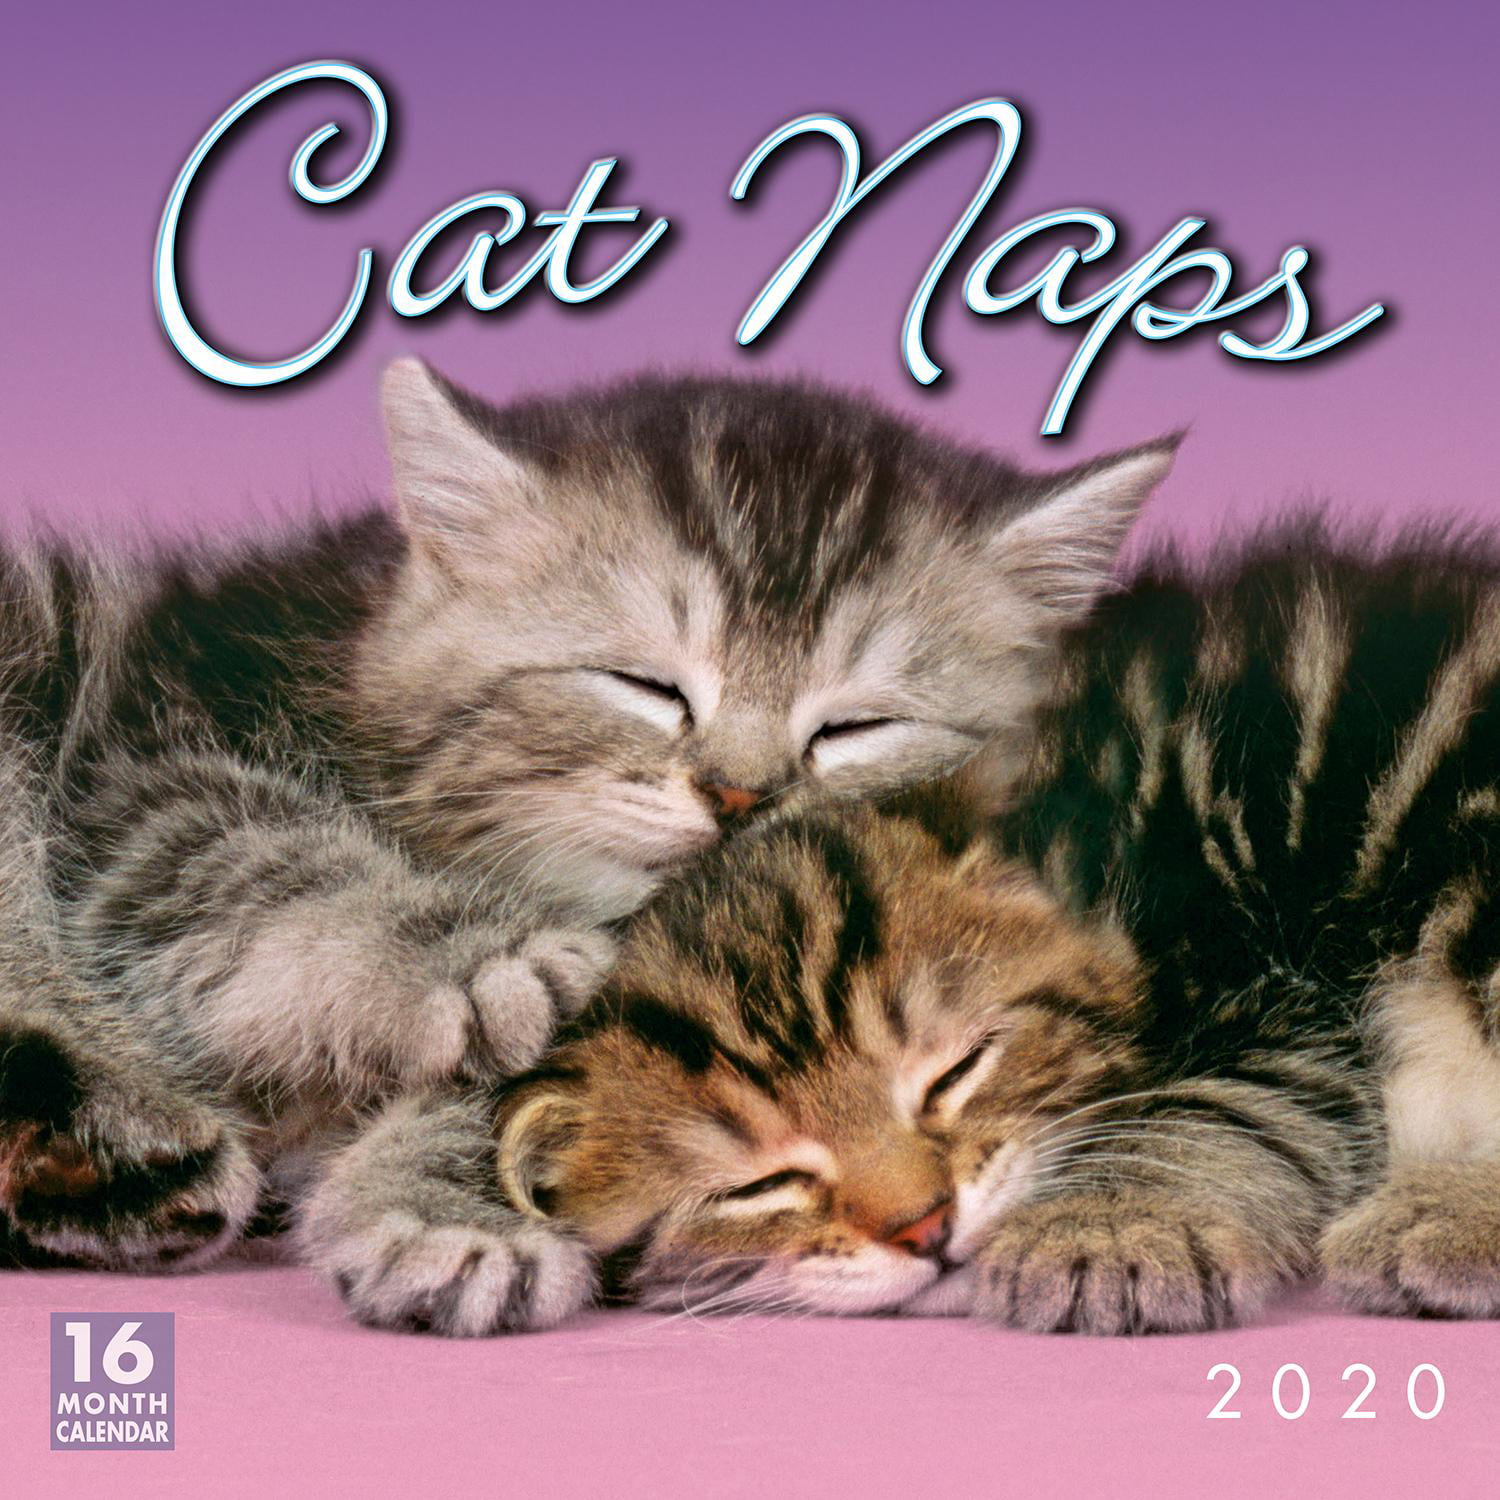 Details about   Cat Naps 2020 Wall Calendar 16-Month 12" x 12" 